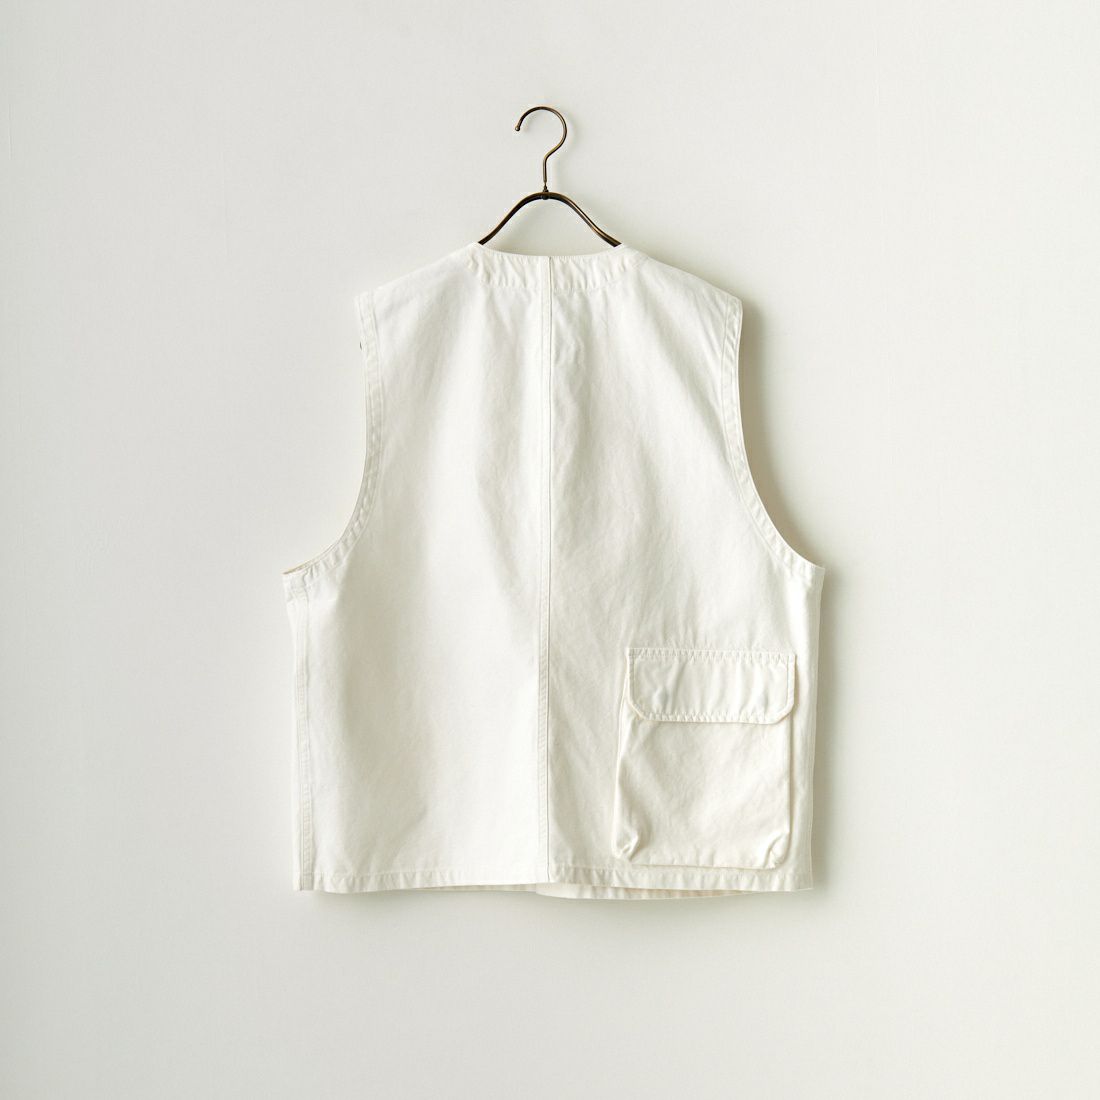 Jeans Factory Clothes [ジーンズファクトリークローズ] C-1ベスト [JFC-231-039] WHITE